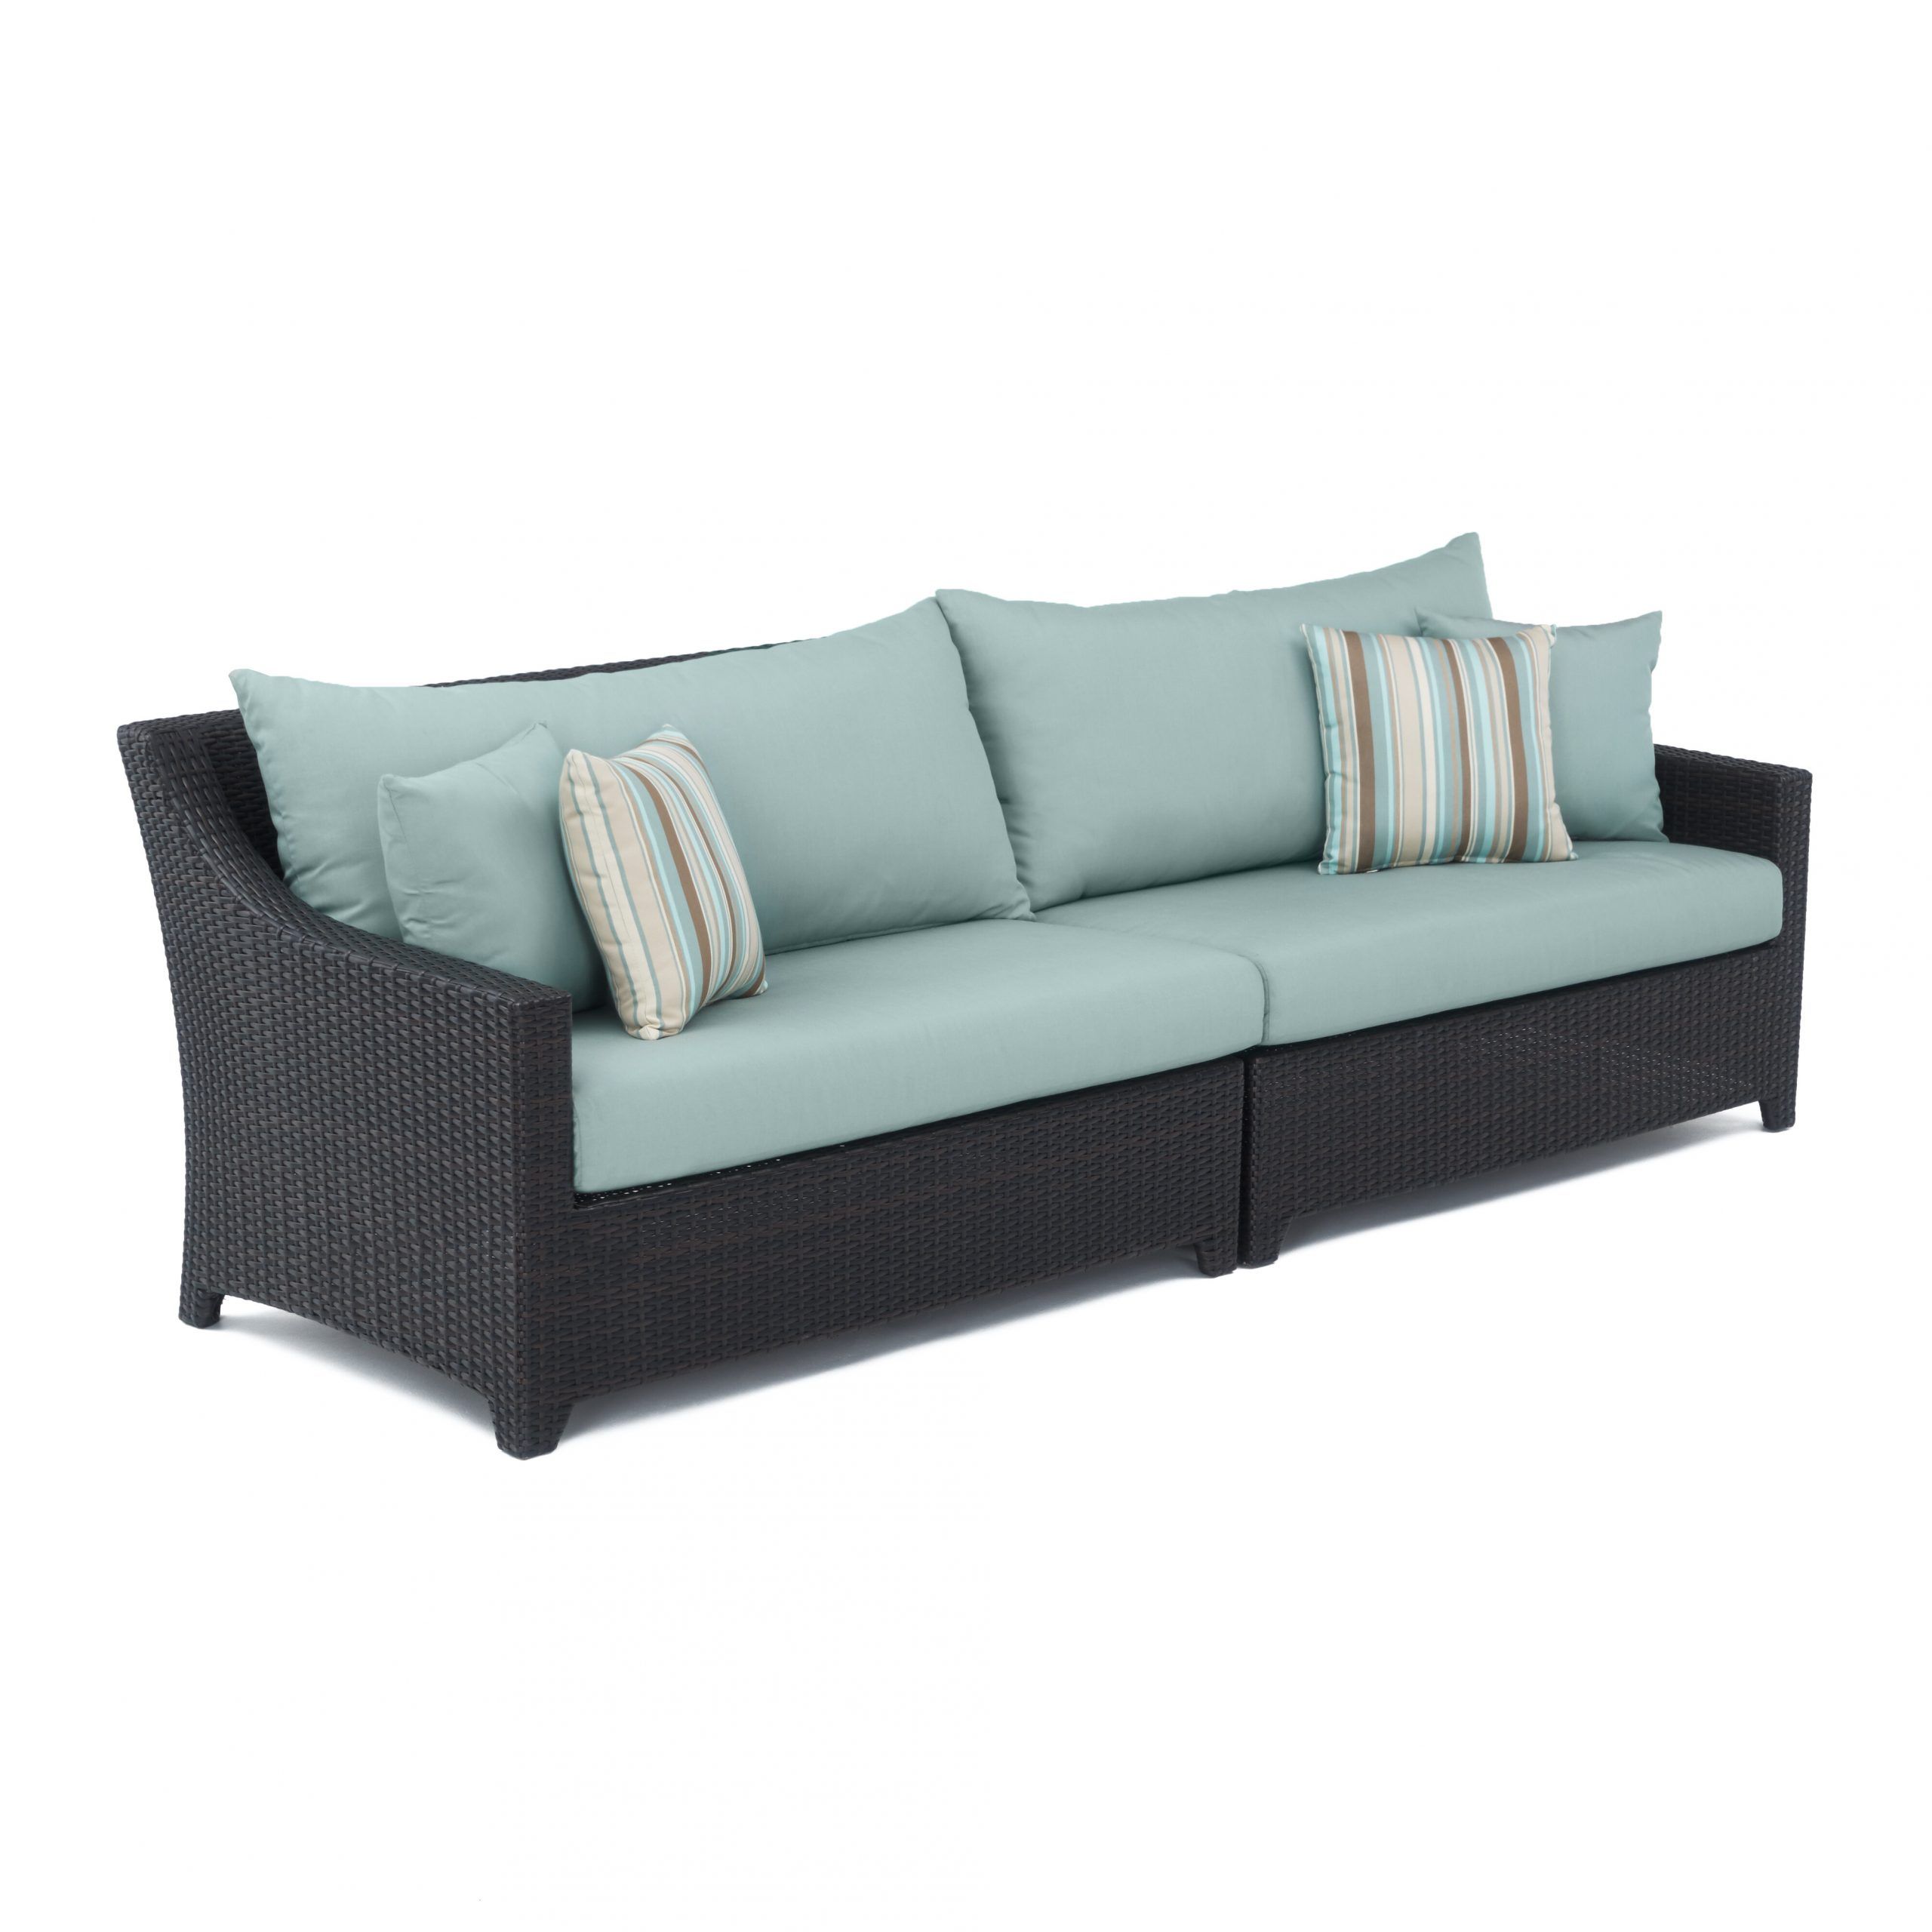 Preferred Fannin Patio Sofas With Cushions Within Northridge Patio Sofa With Sunbrella Cushions (View 8 of 25)